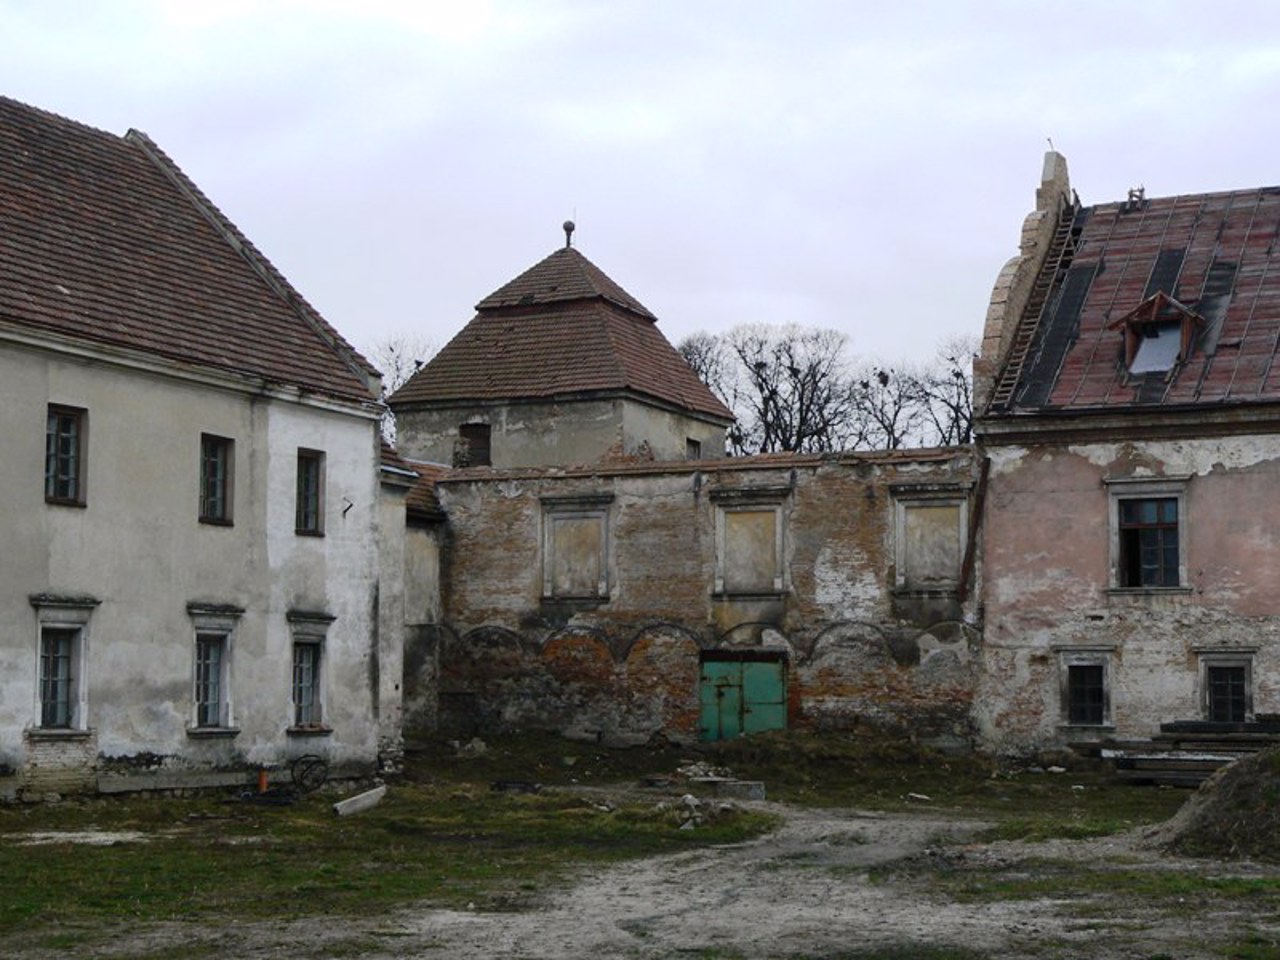 Zhovkva Castle Museum